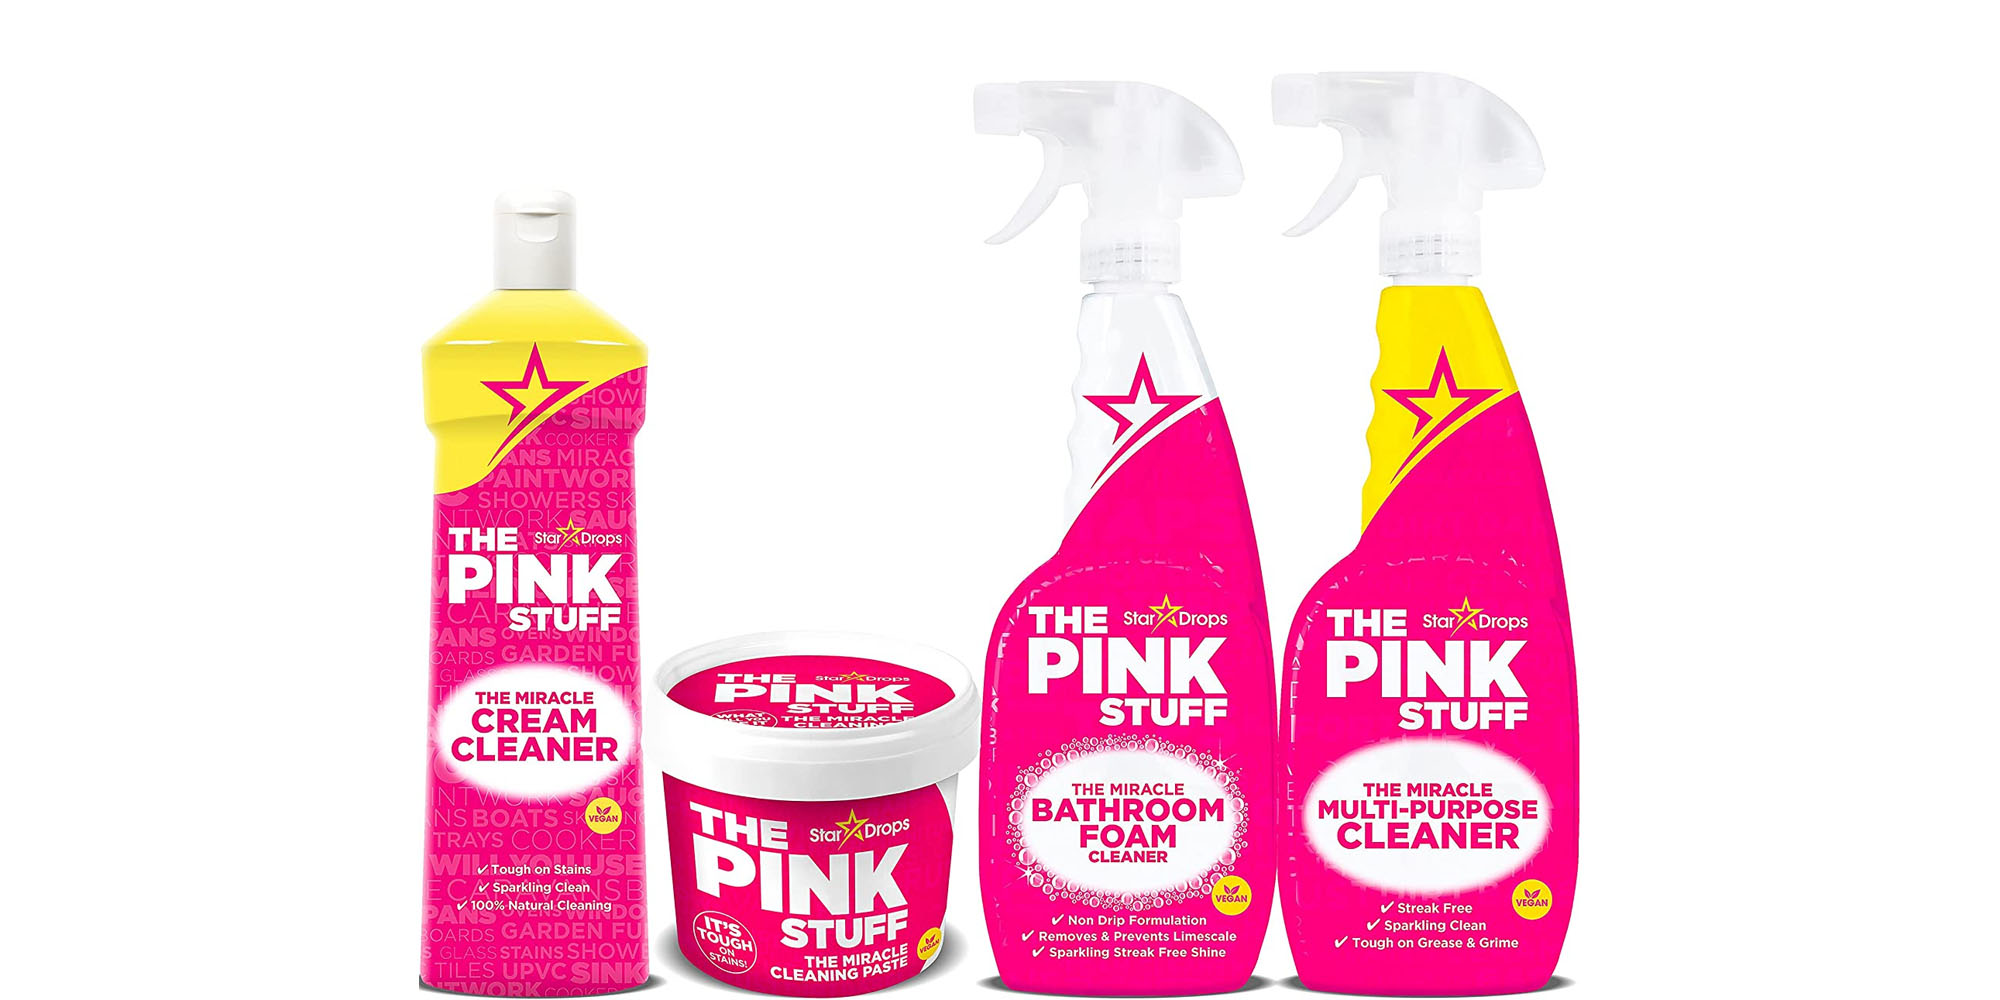 Prime Members can grab The Pink Stuff Ultimate Bundle cleaning